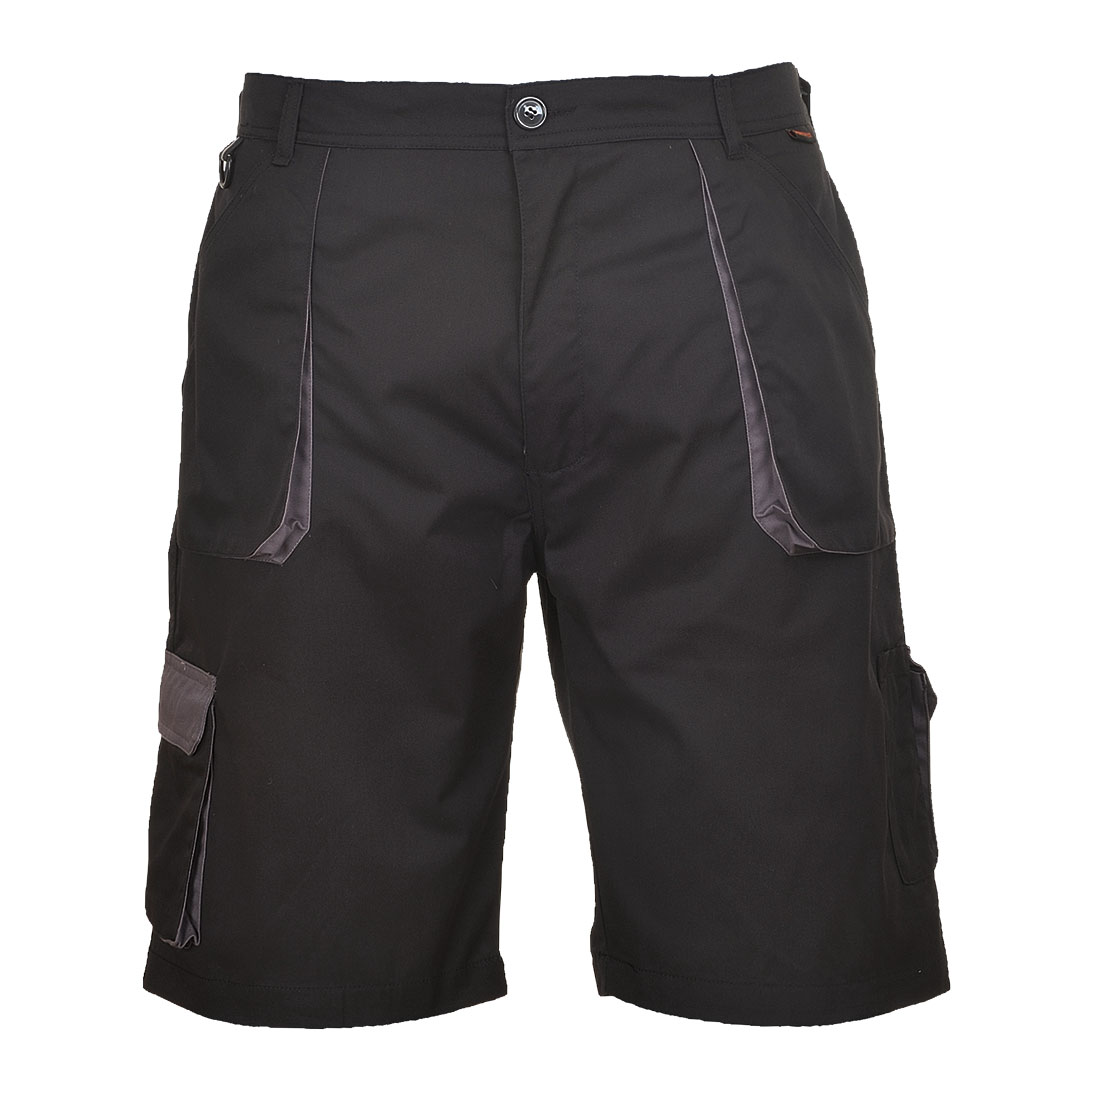 Portwest Texo Contrast Shorts - Black